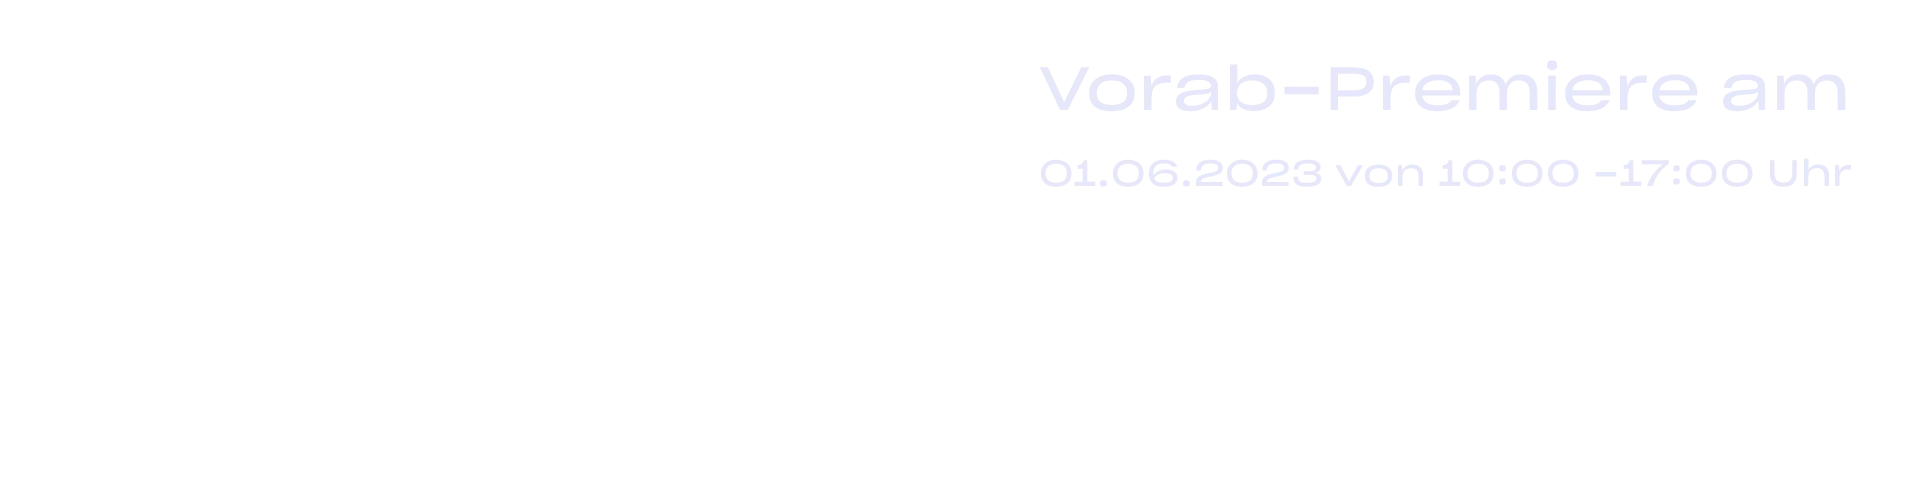 Vorab-Premiere